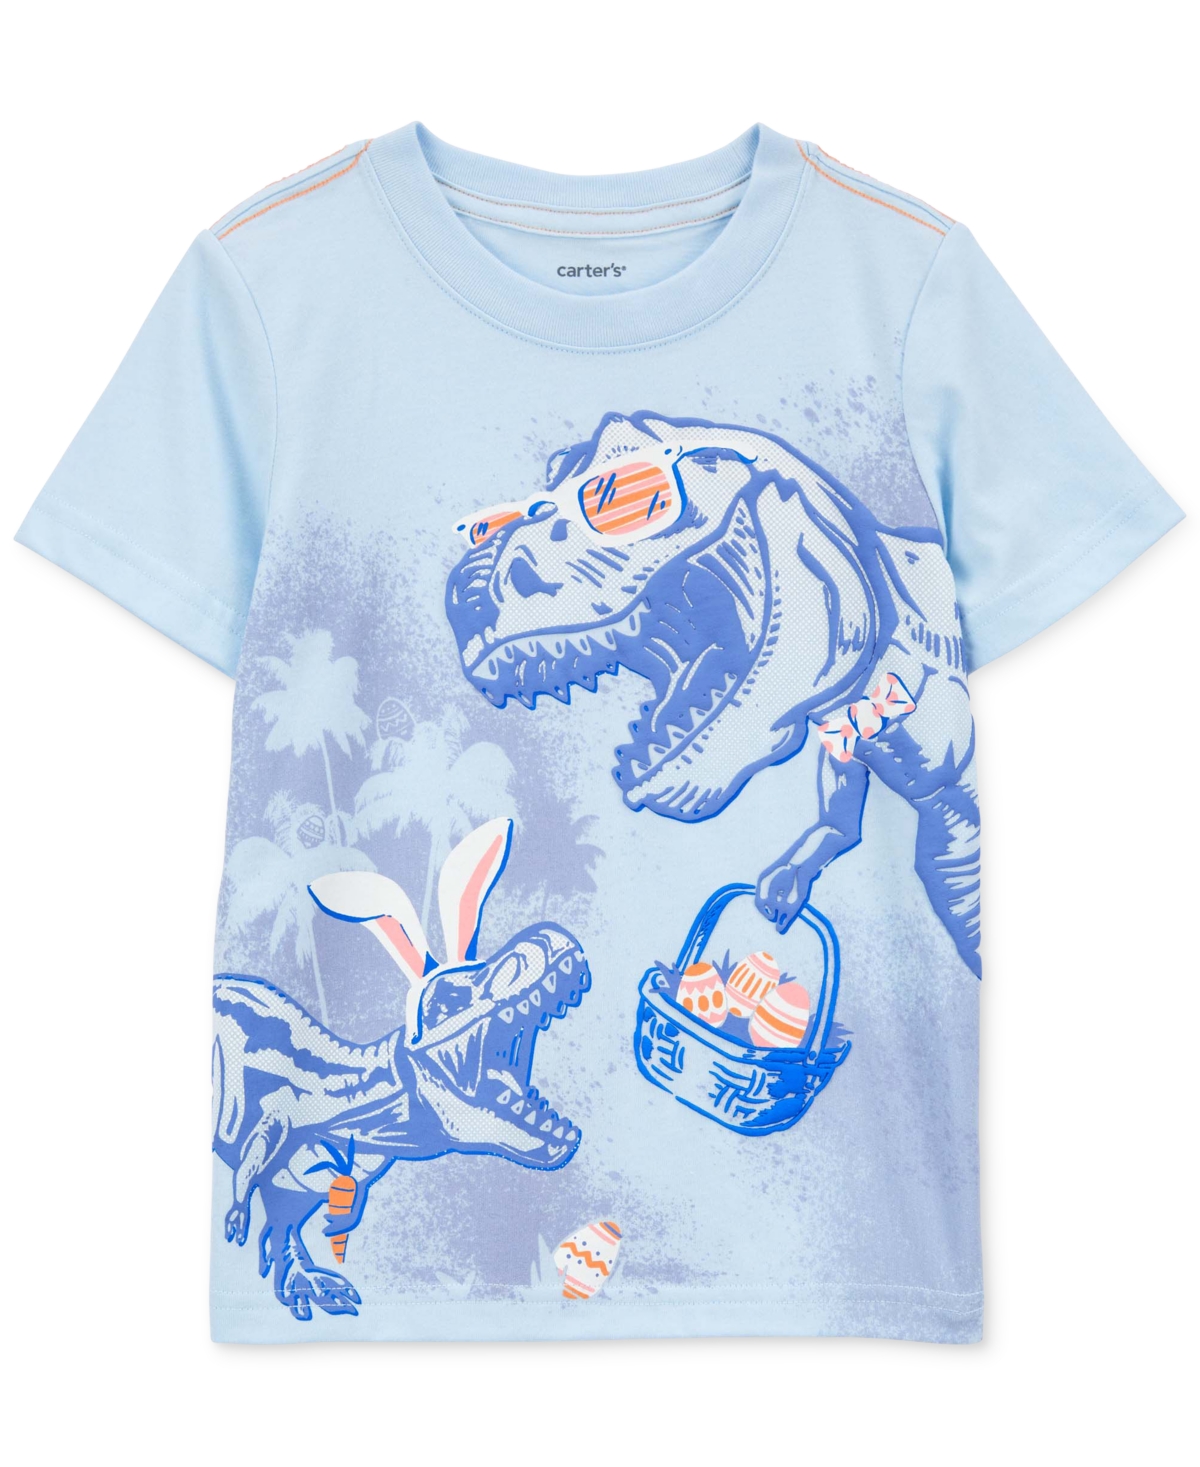 Carter's Babies' Toddler Boys Easter Bunny Dinosaur Jersey T-shirt In Blue